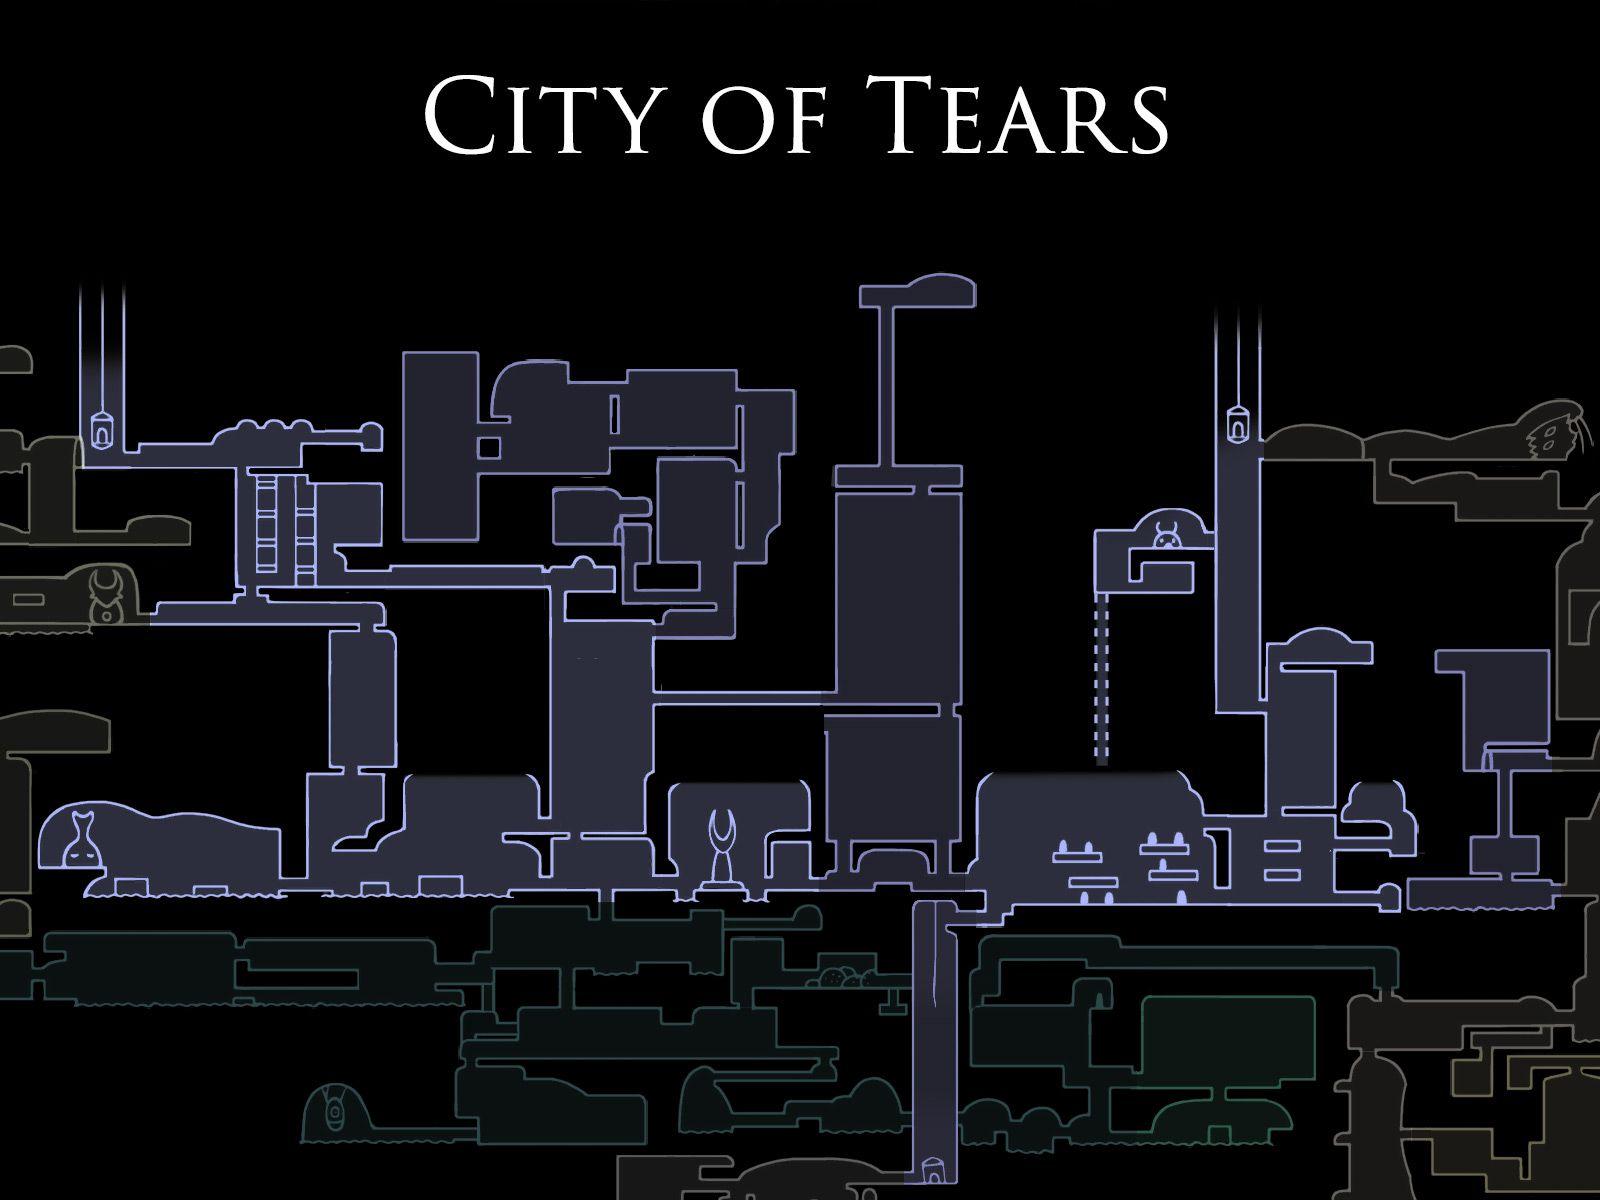 City of Tears